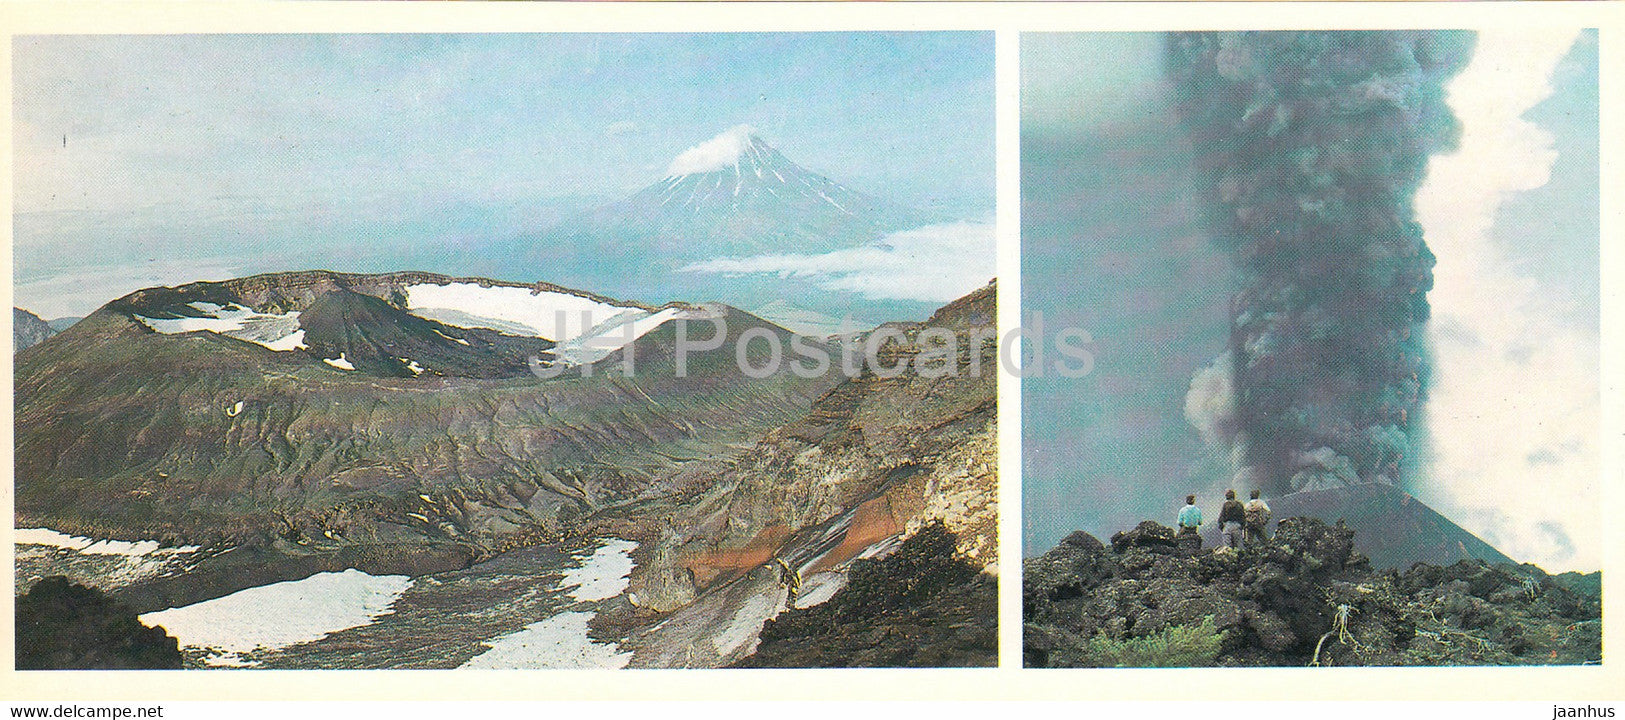 Kamchatka - crater of the Krasheninnikov volcano - eruption of Tolbachik volcano - 1981 - Russia USSR - unused - JH Postcards